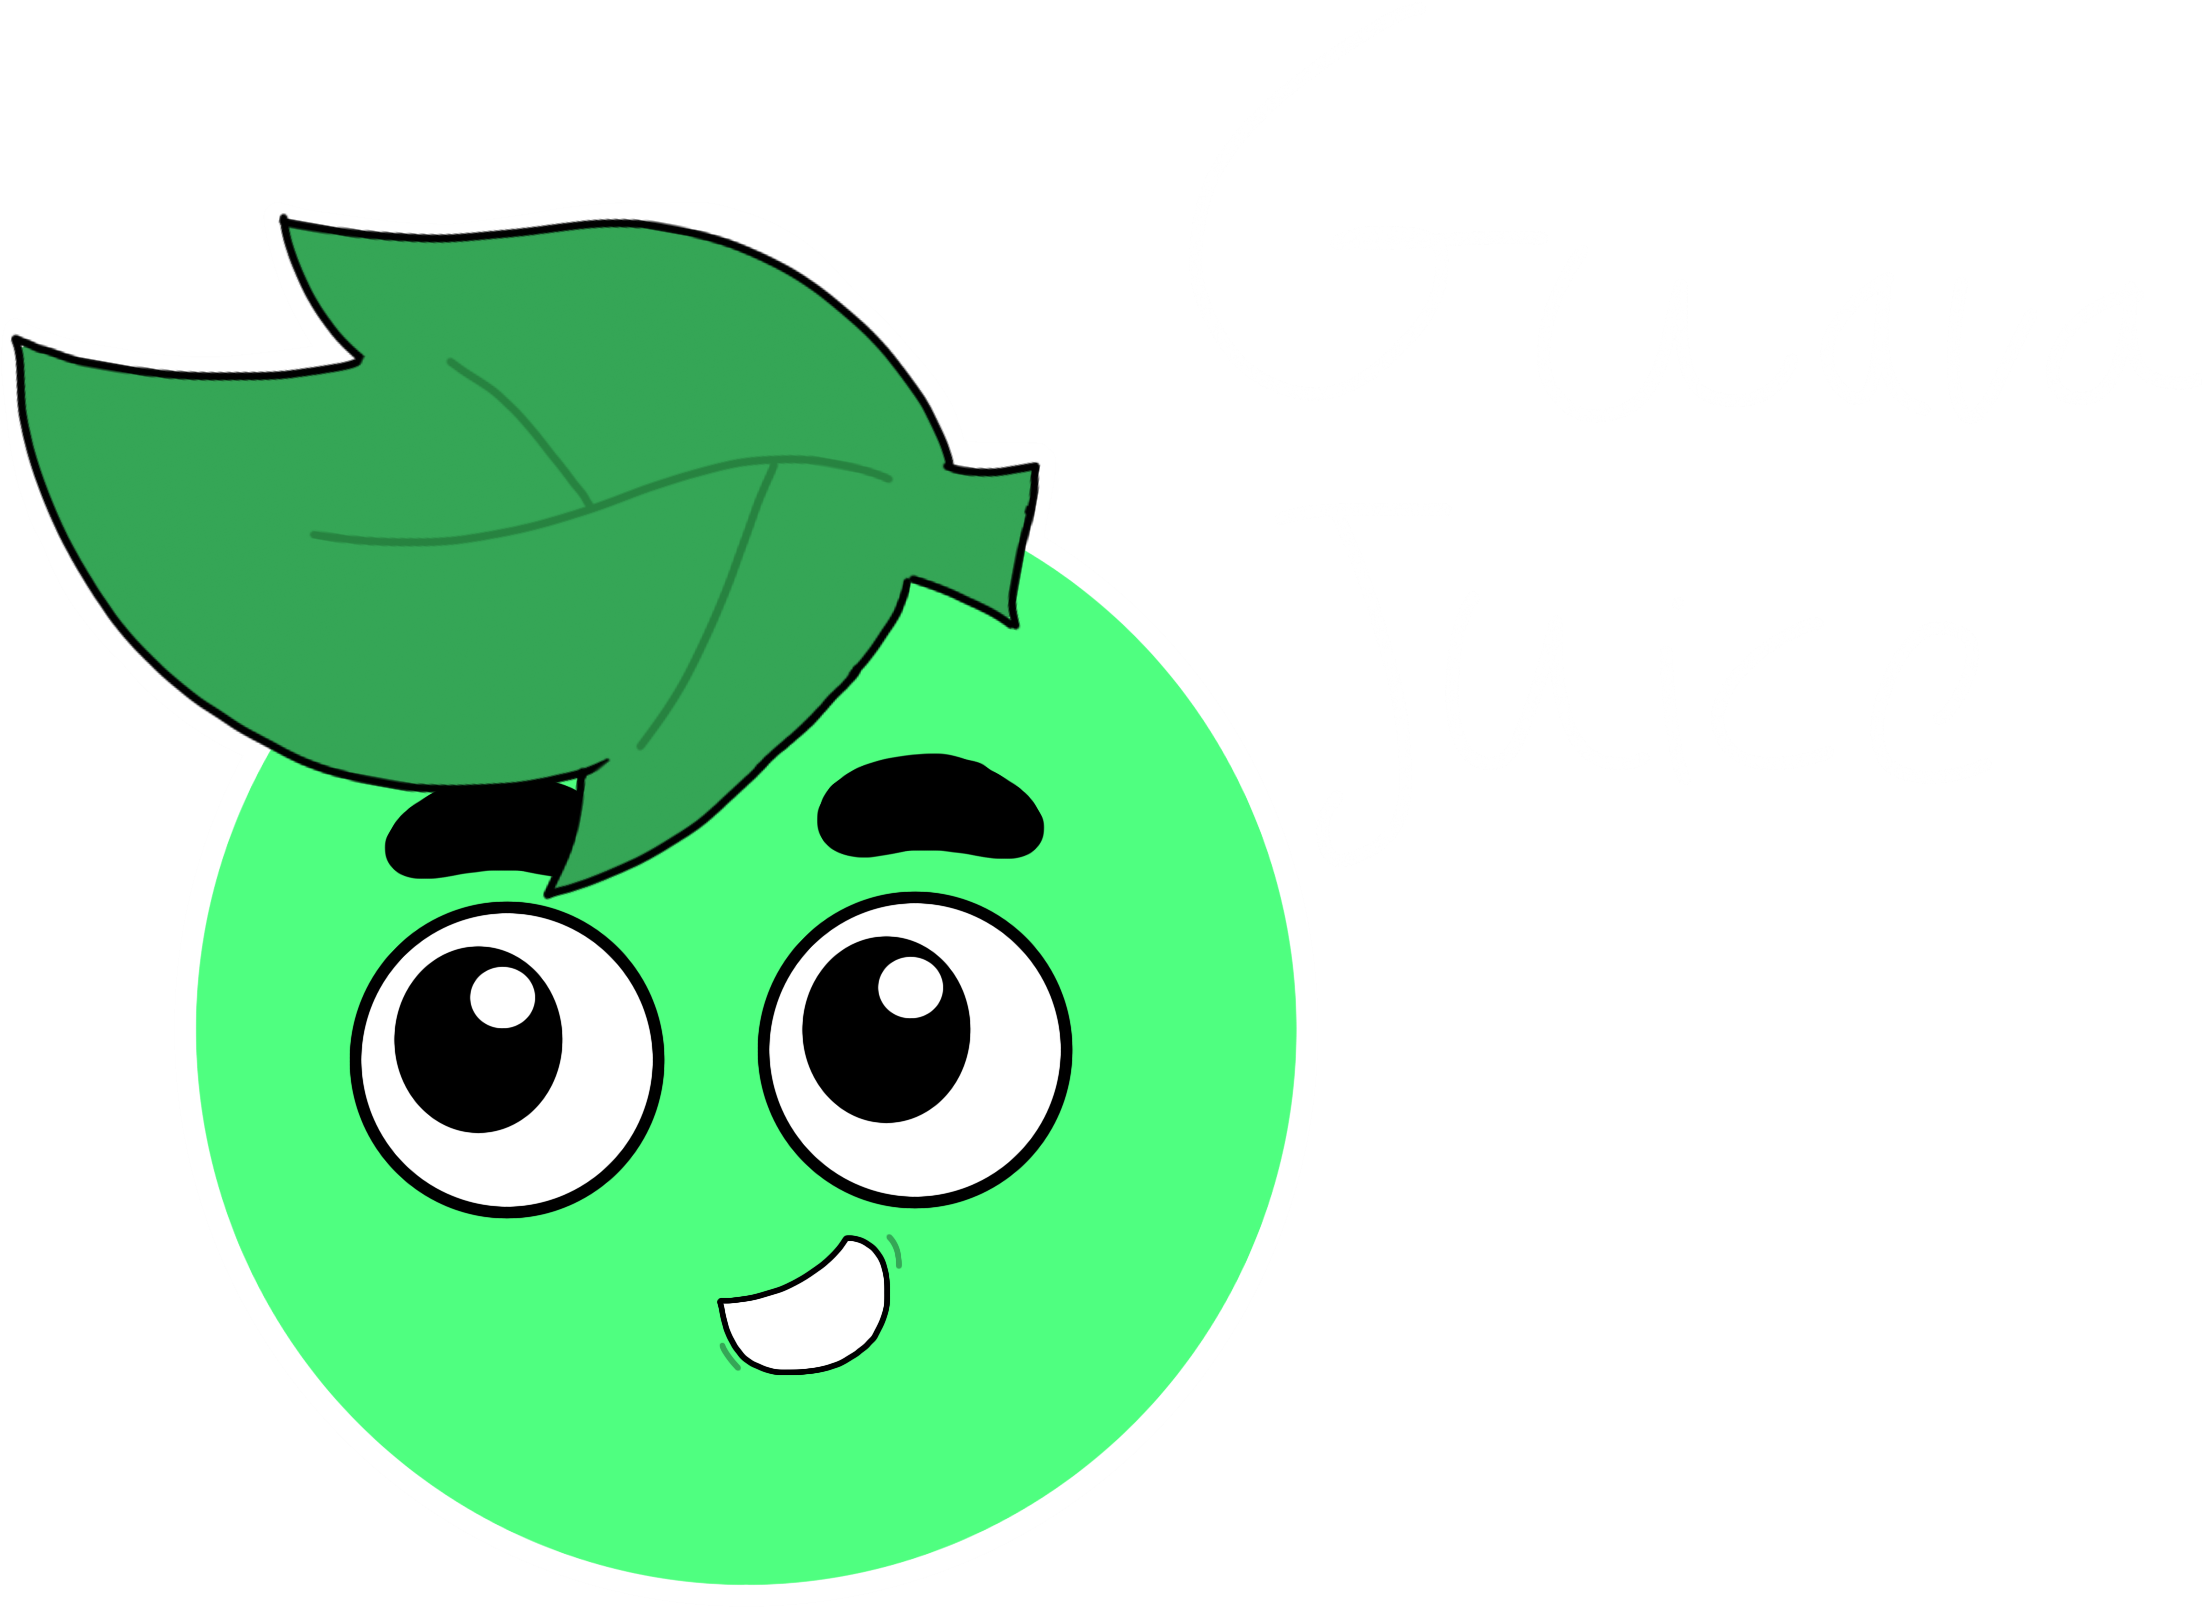 Jpg Stock Logos - Fanart Of Guava Juice (2371x1809), Png Download